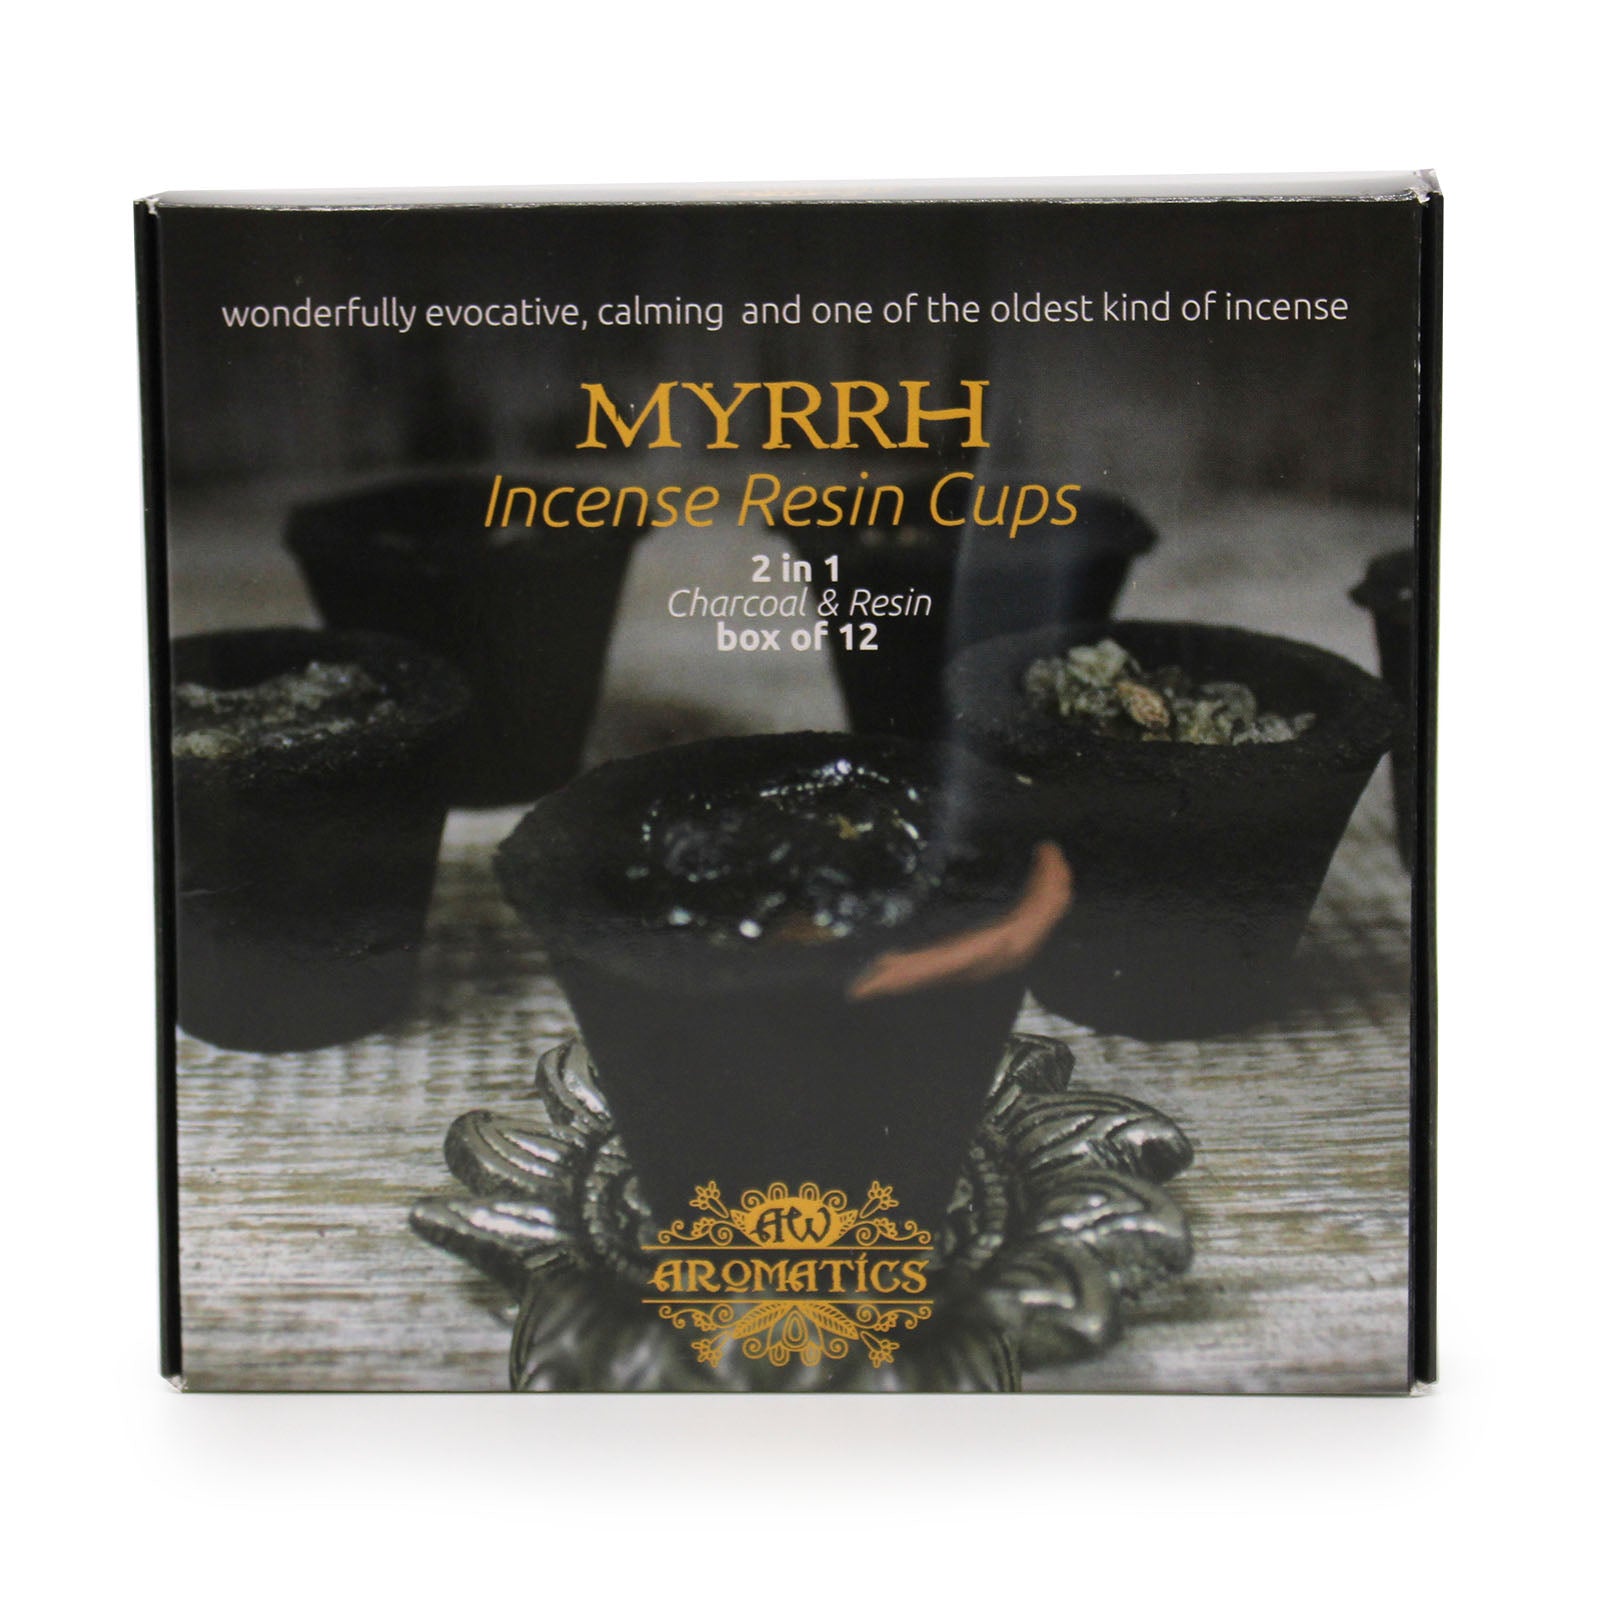 View Box of 12 Resin Cups Myrrh information